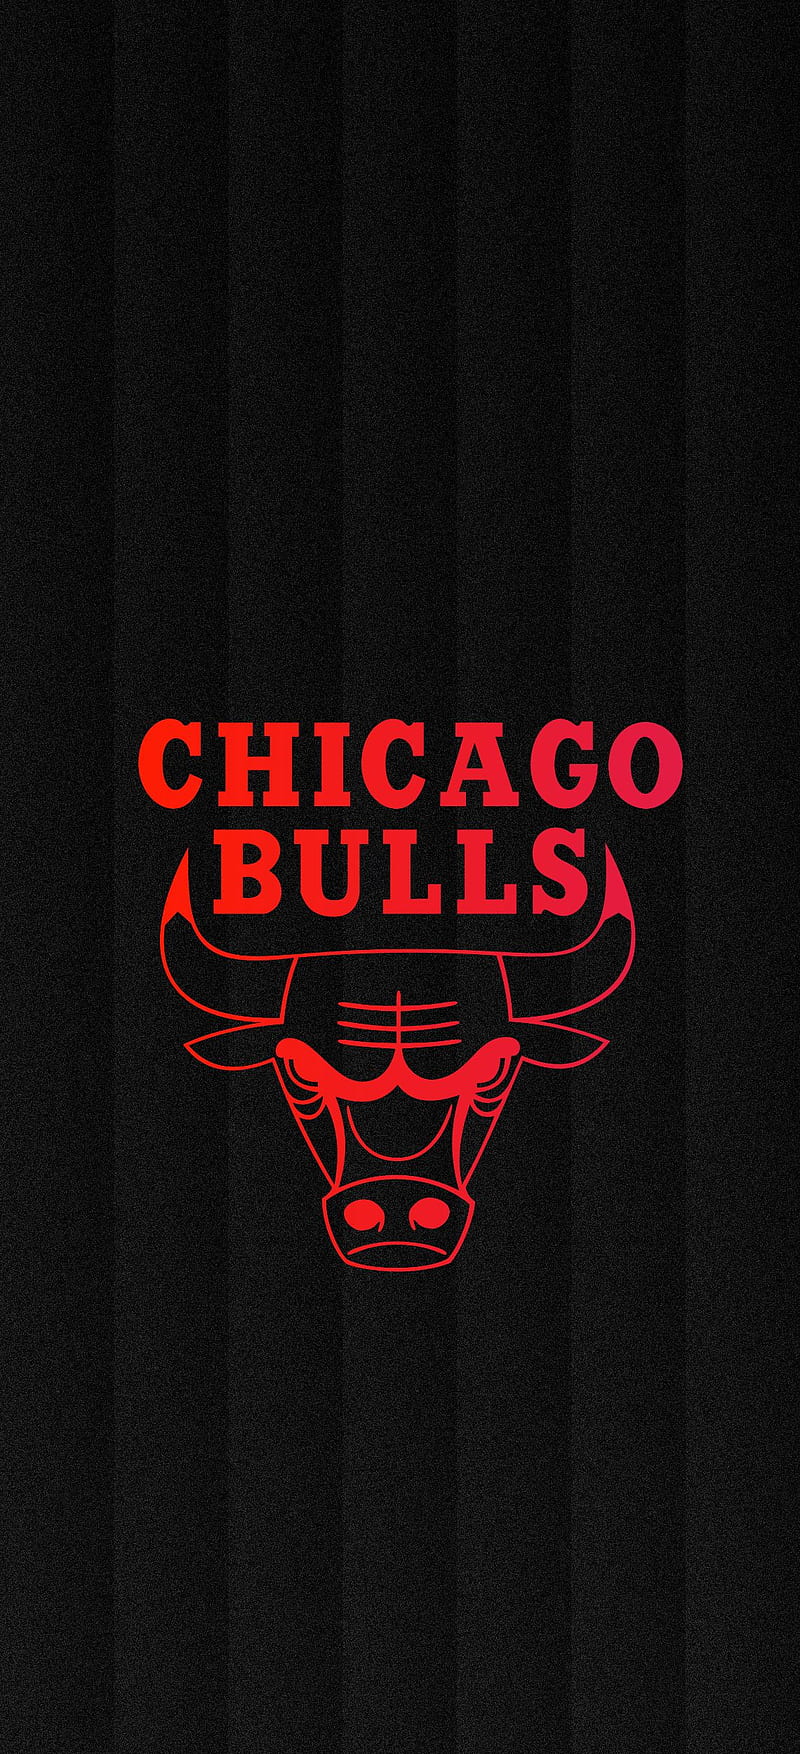 Chicago Bulls (NBA) iPhone X/XS/11/Android Lock Screen Wal…